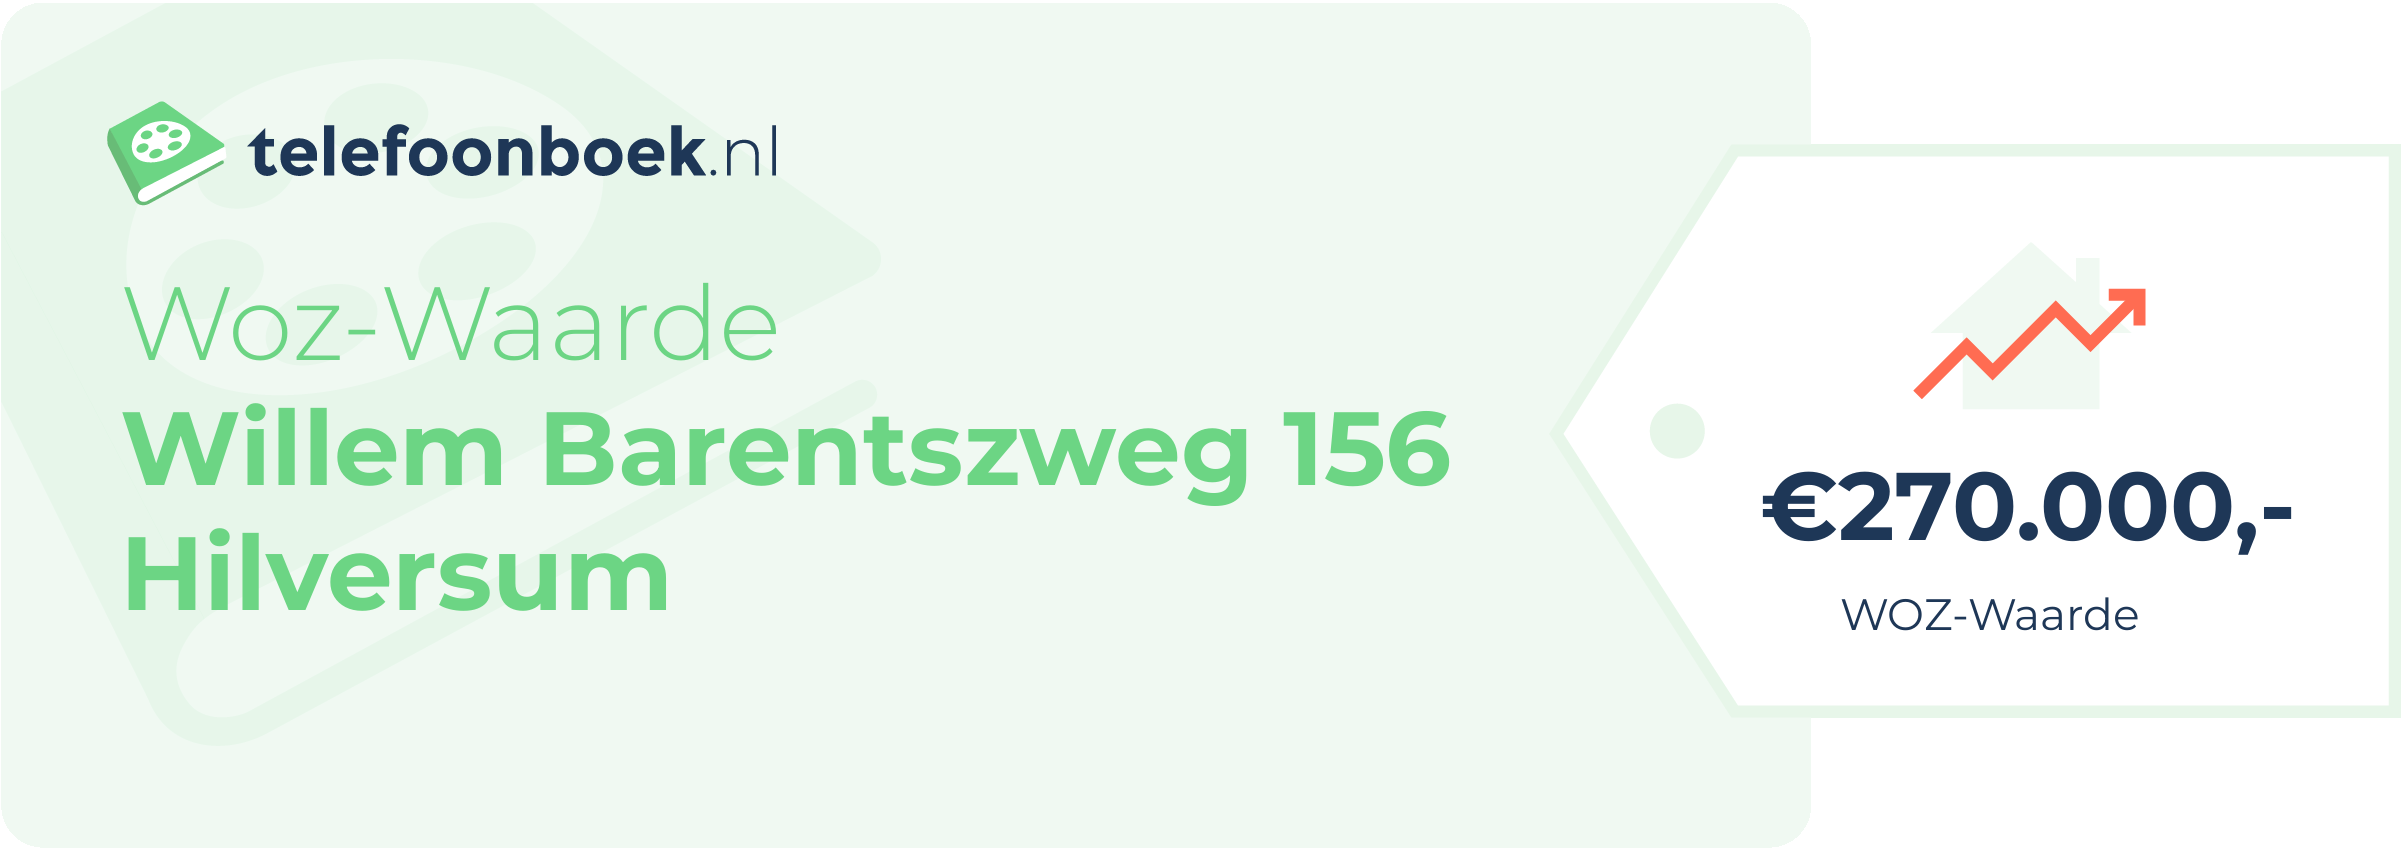 WOZ-waarde Willem Barentszweg 156 Hilversum